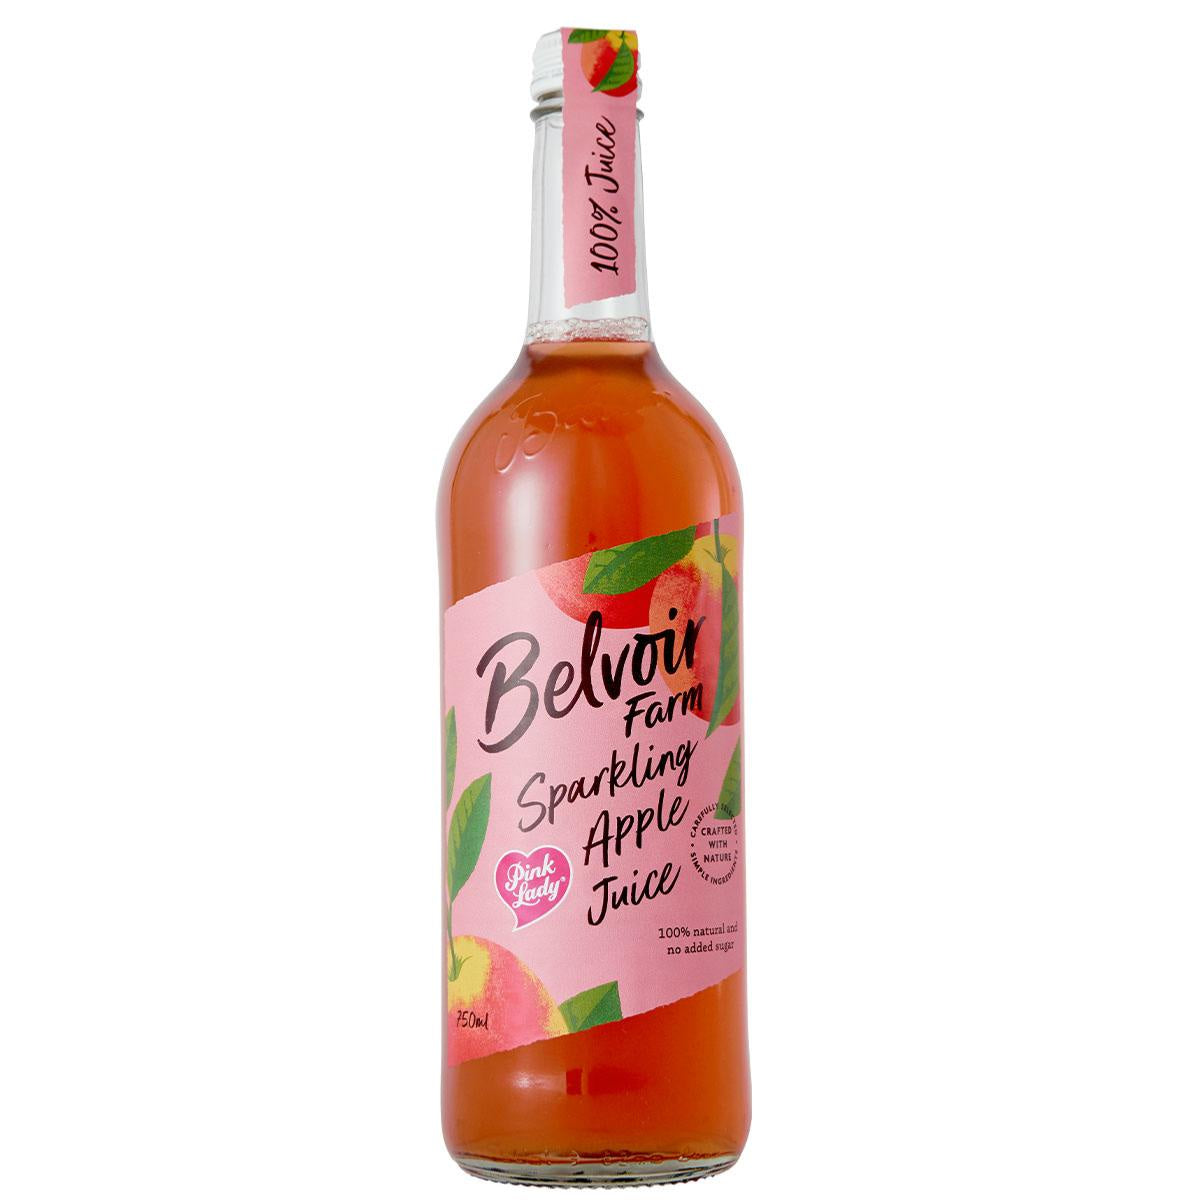 Belvoir Sparkling Pink Lady Apple Juice, 75ml